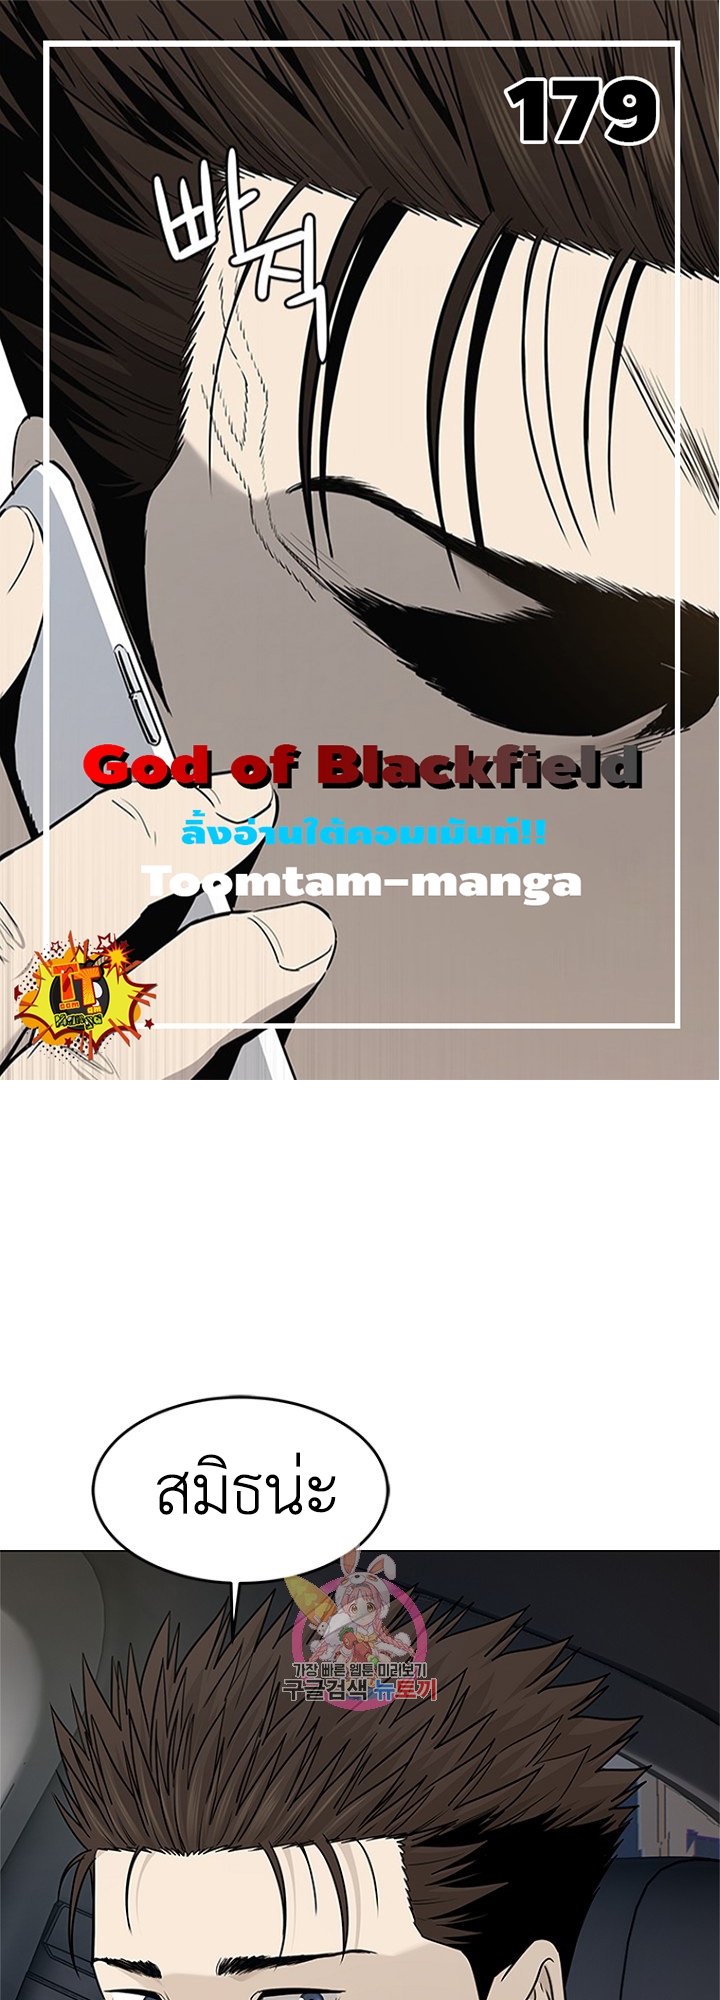 God of Blackfield 179 25 11 25660001